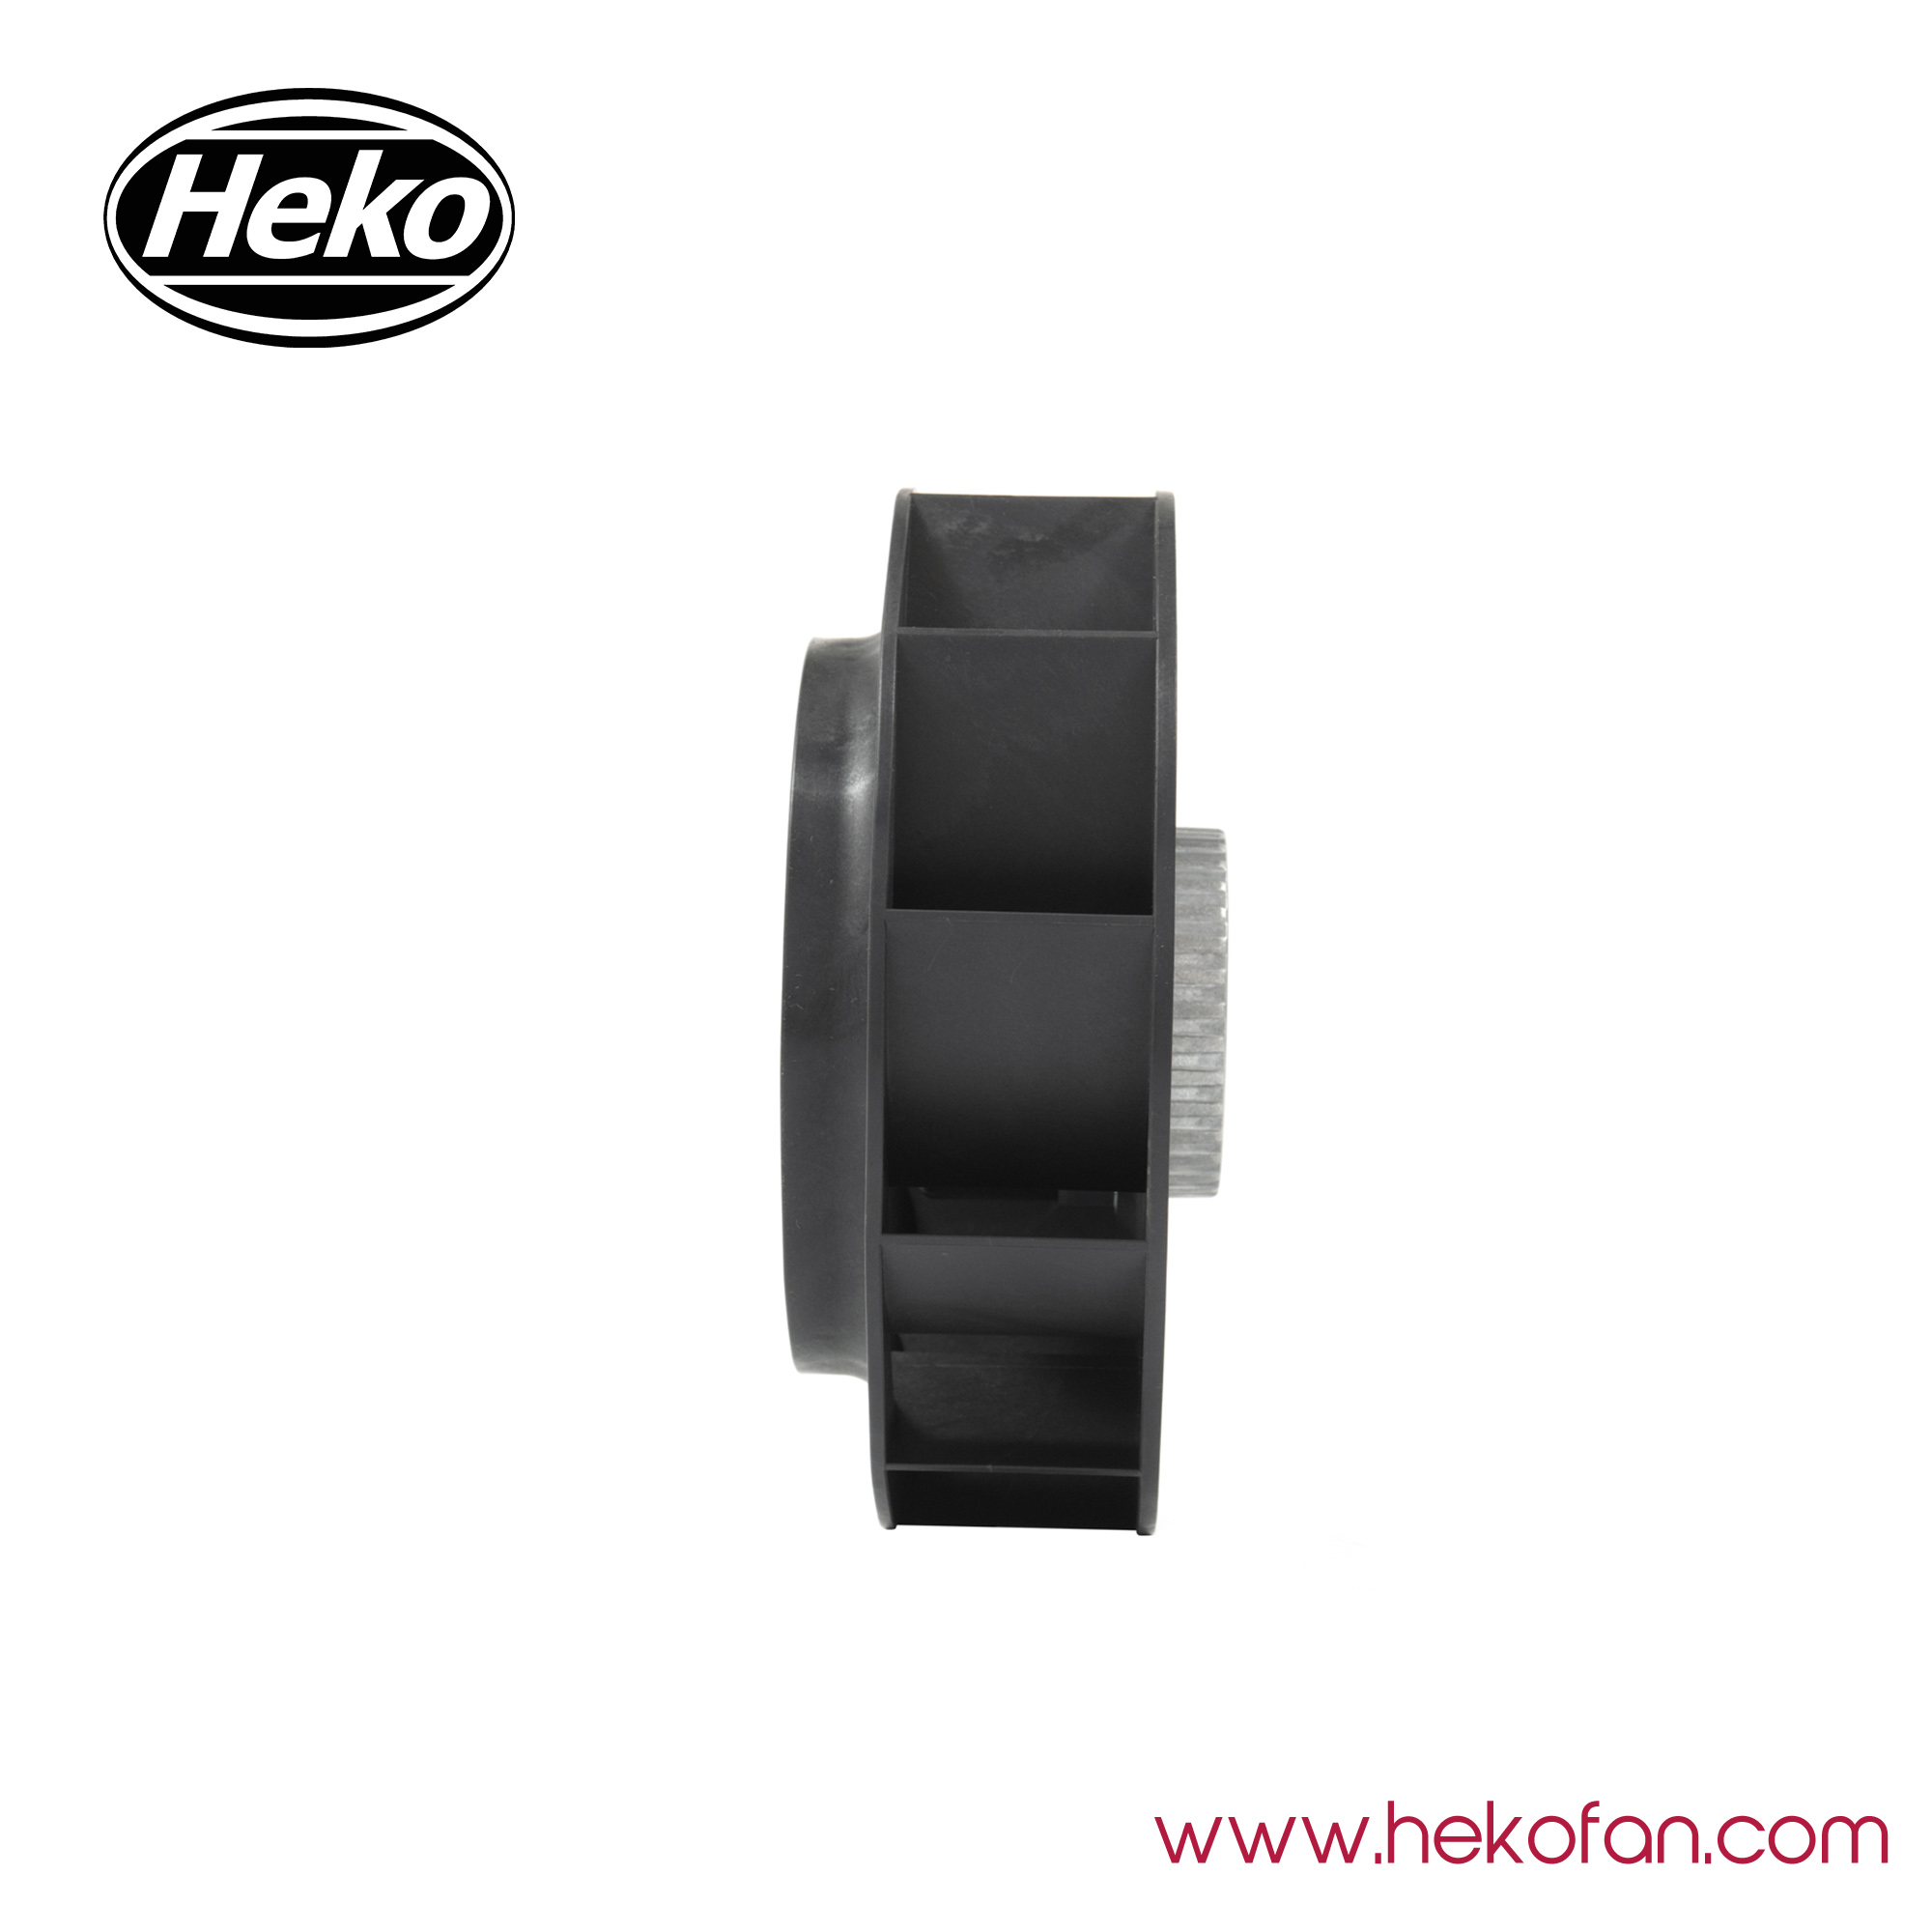 HEKO DC225mm Industrial Backward Centrifugal Extractor Fans 